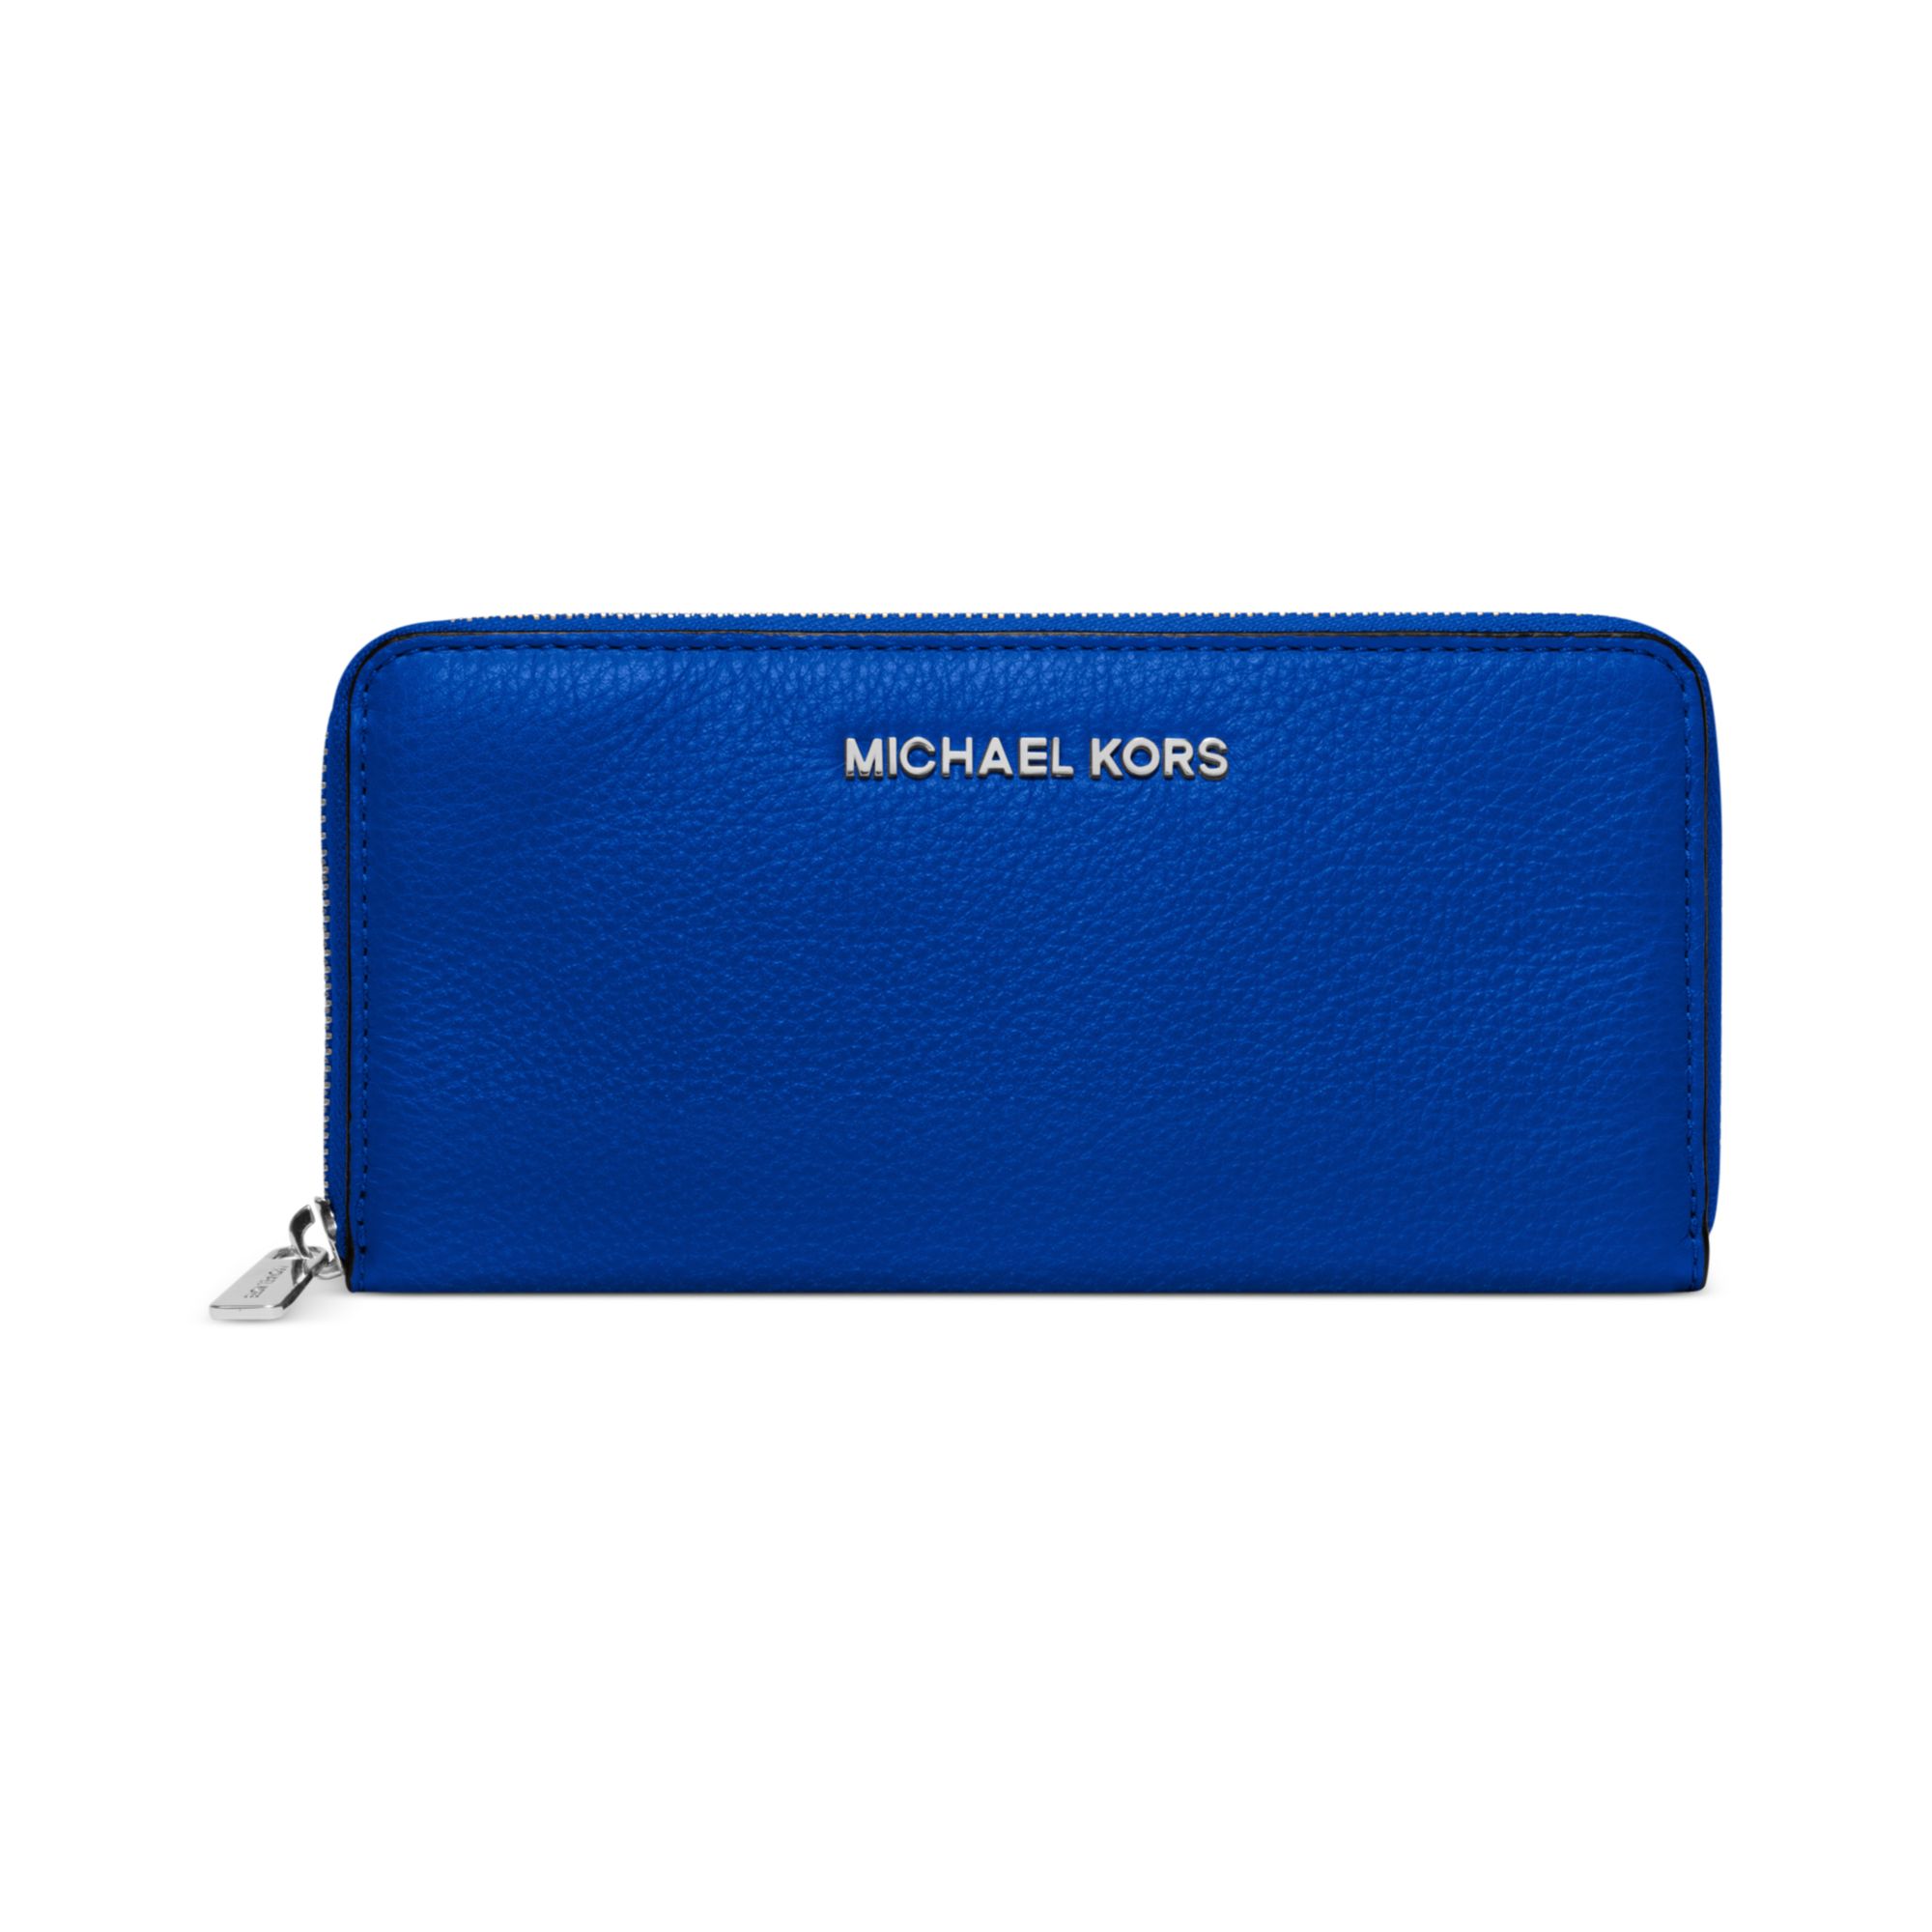 michael kors bedford wallet blue